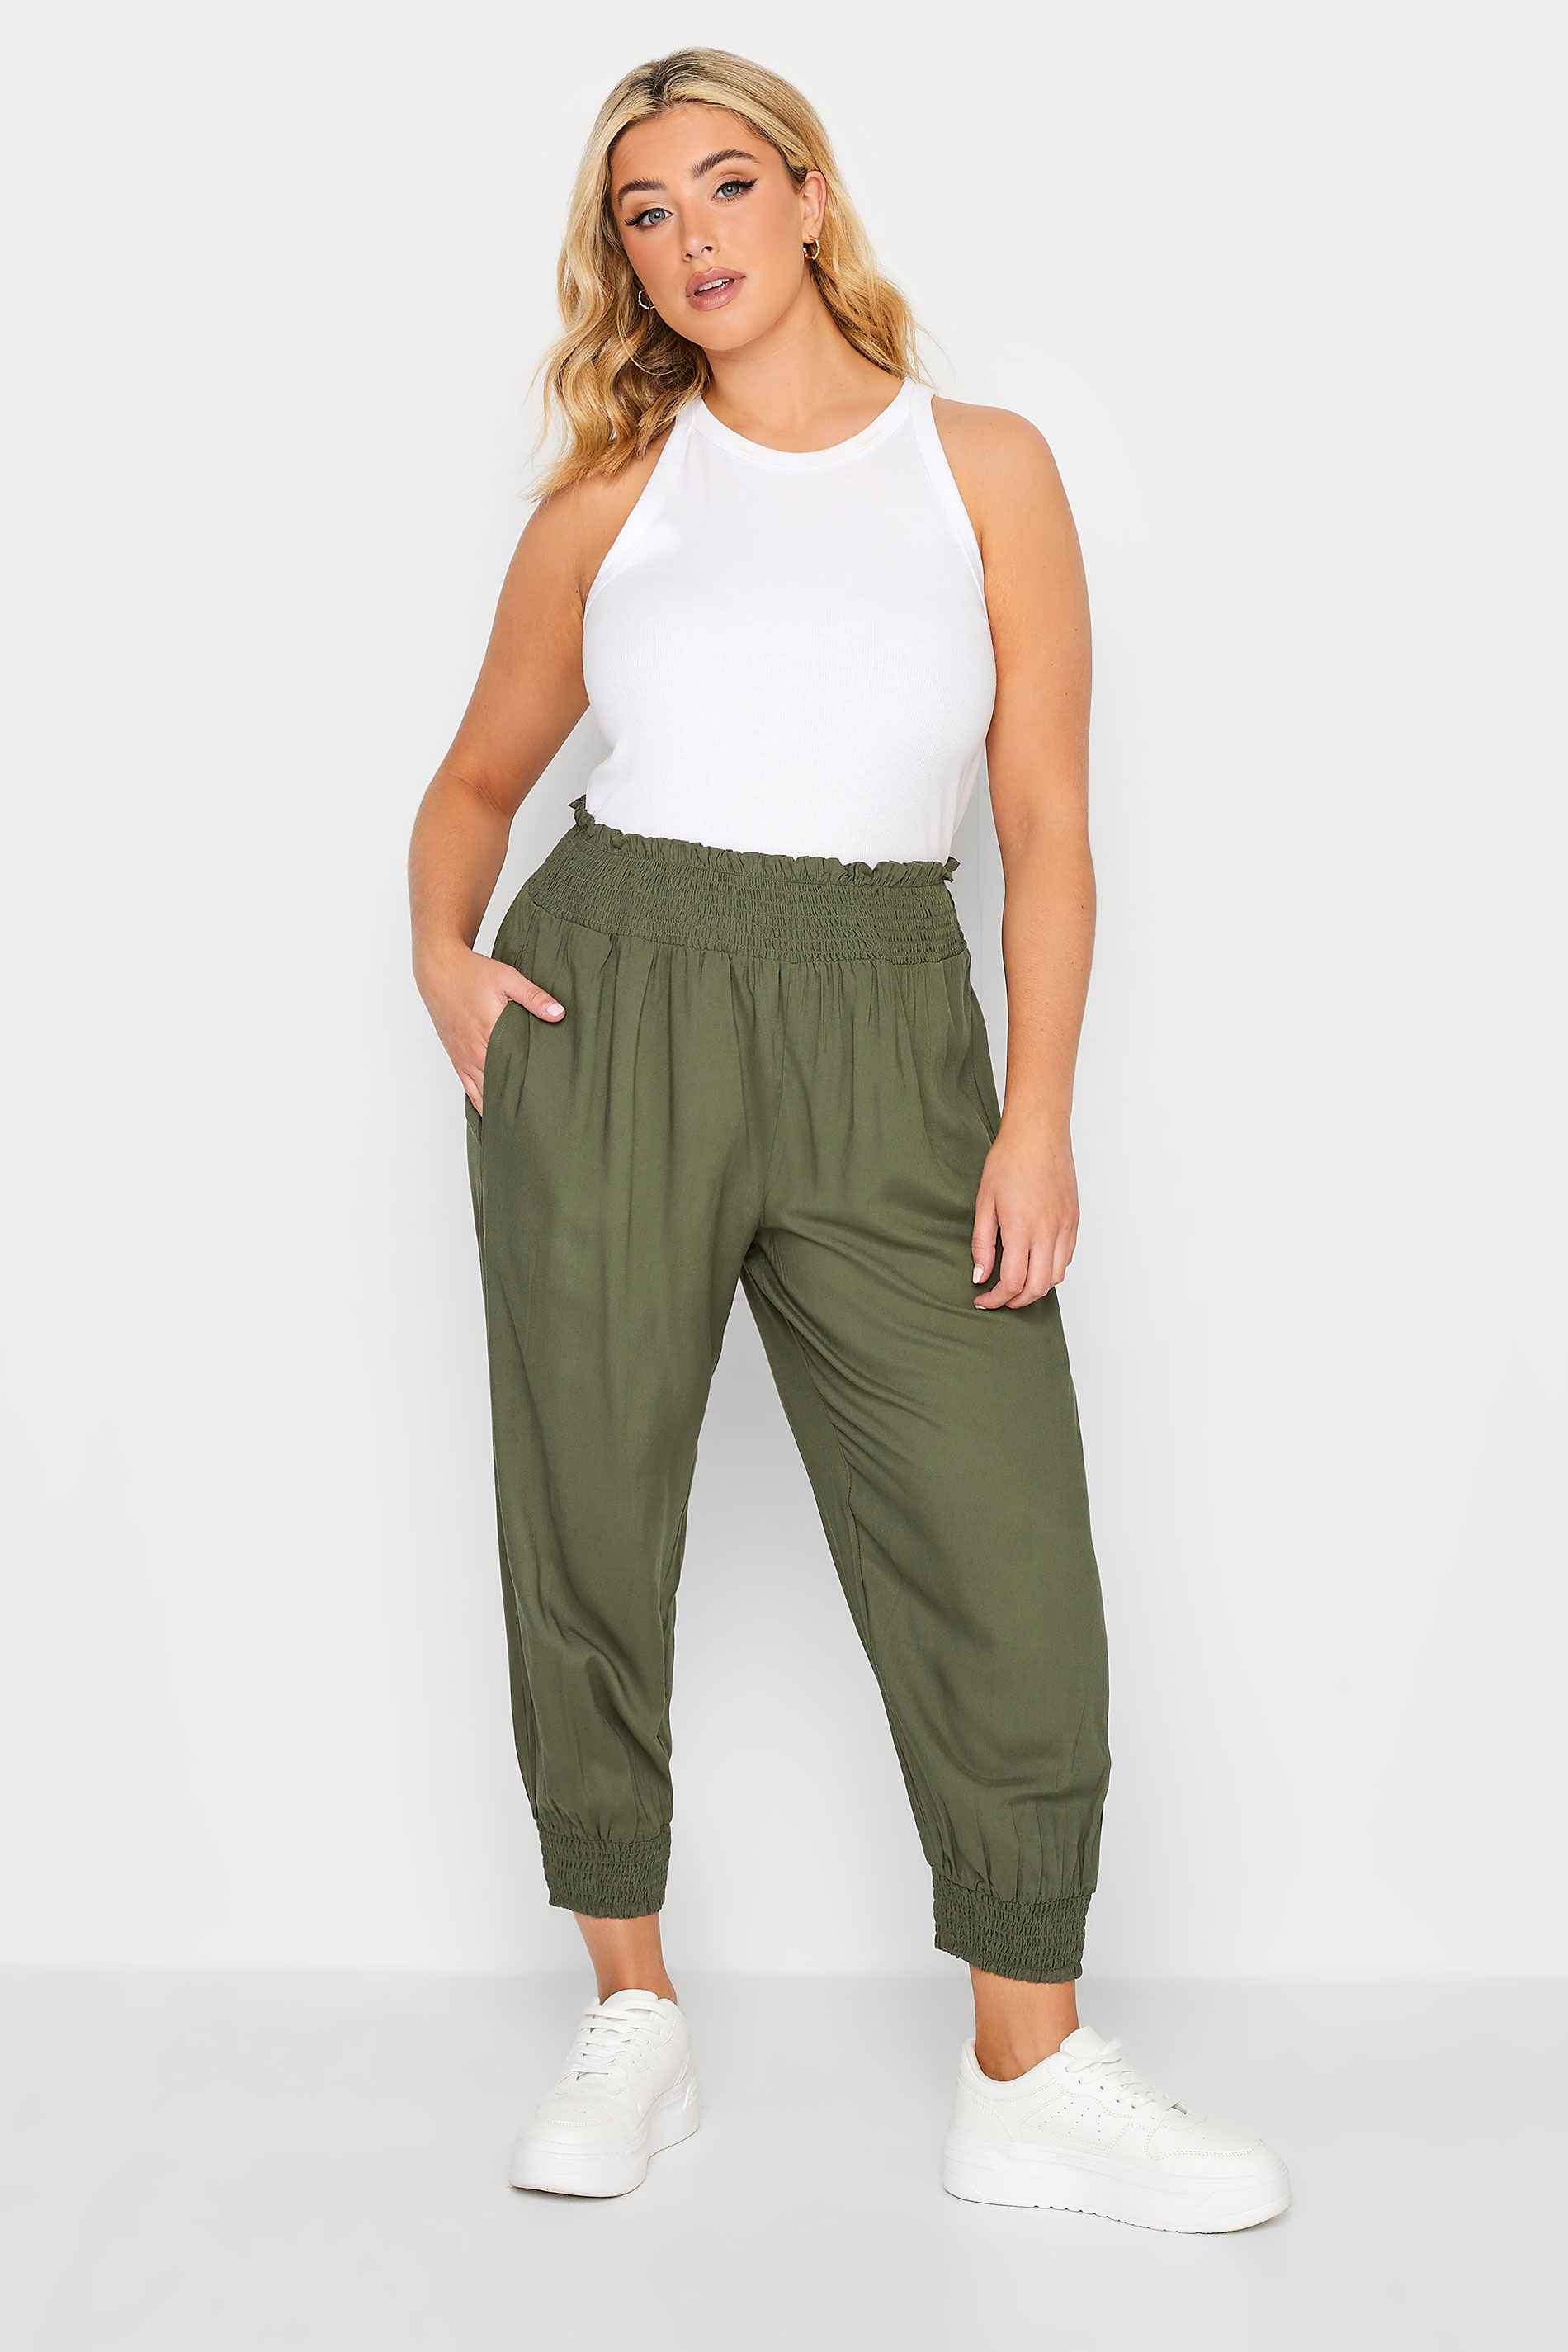 Women's Baggy Harem Pants Linen Wide Leg Pants Casual Elastic Waist Trousers  Khaki at Amazon Women's Clothing store